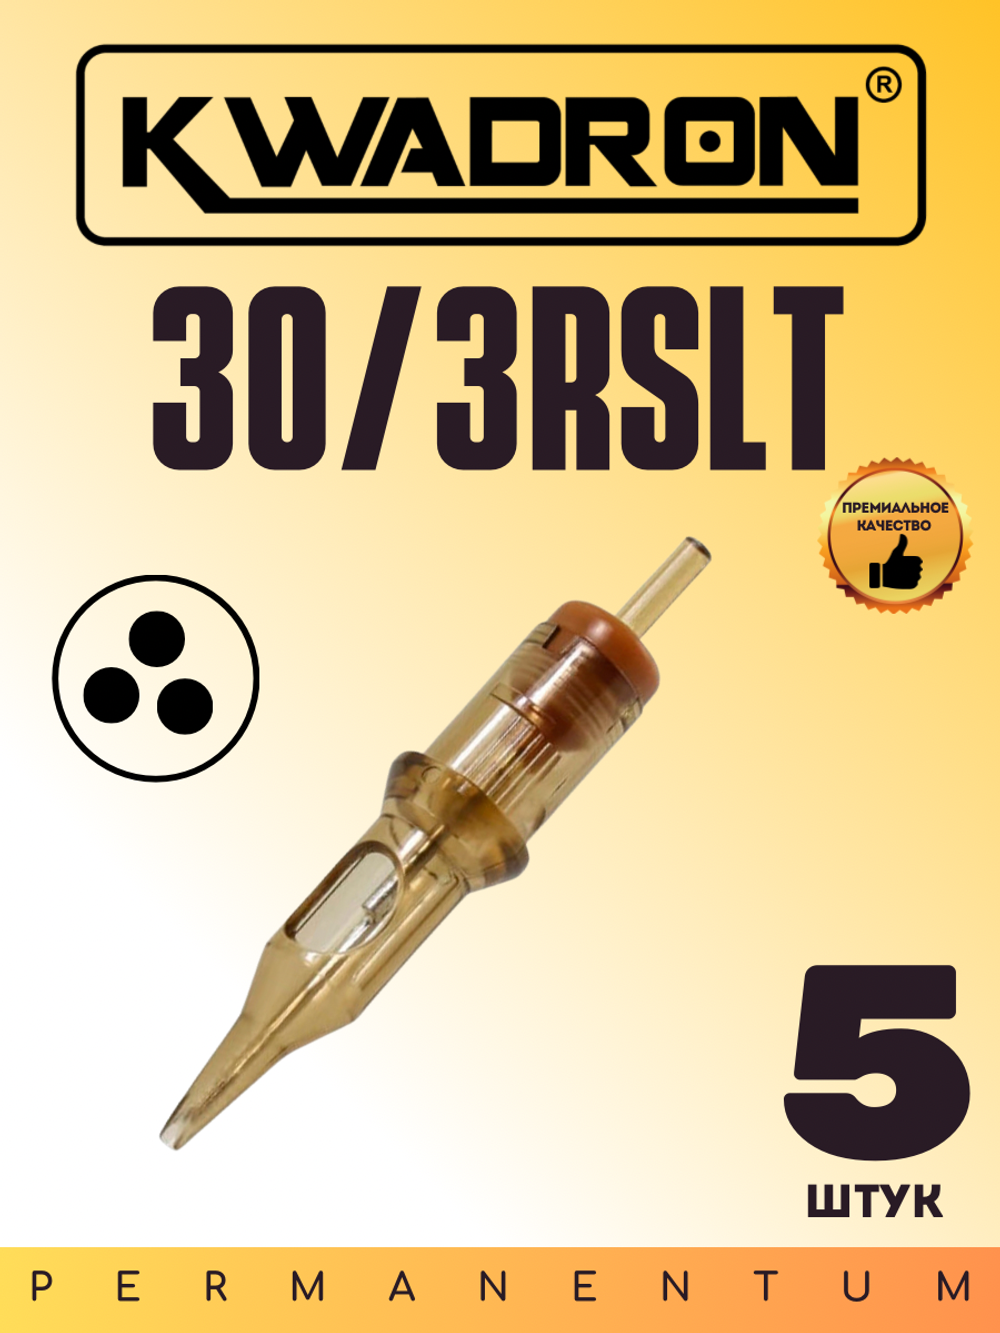 Картридж для татуажа "KWADRON Round Liner 30/3RSLT" блистер 5 шт.